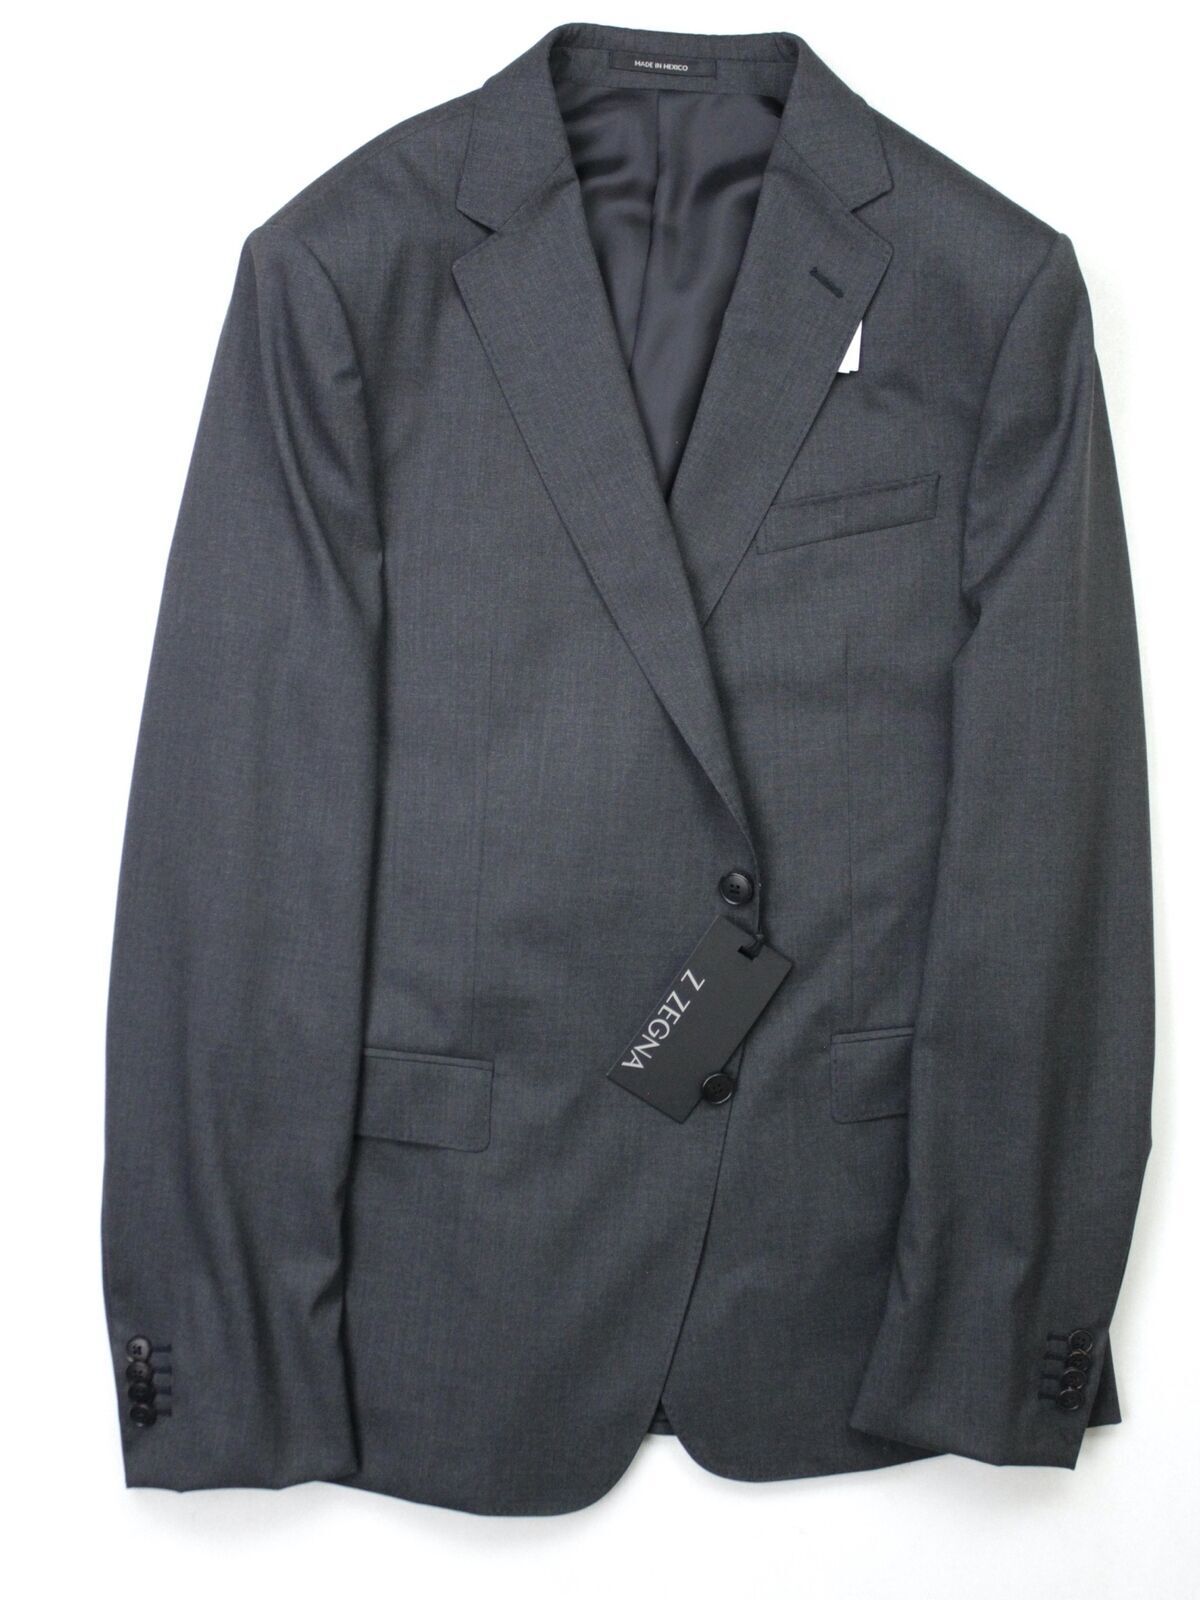 Z Zegna Mens Slim Fit Travel Suit 44R / 37W Charcoal Grey Flat Pant